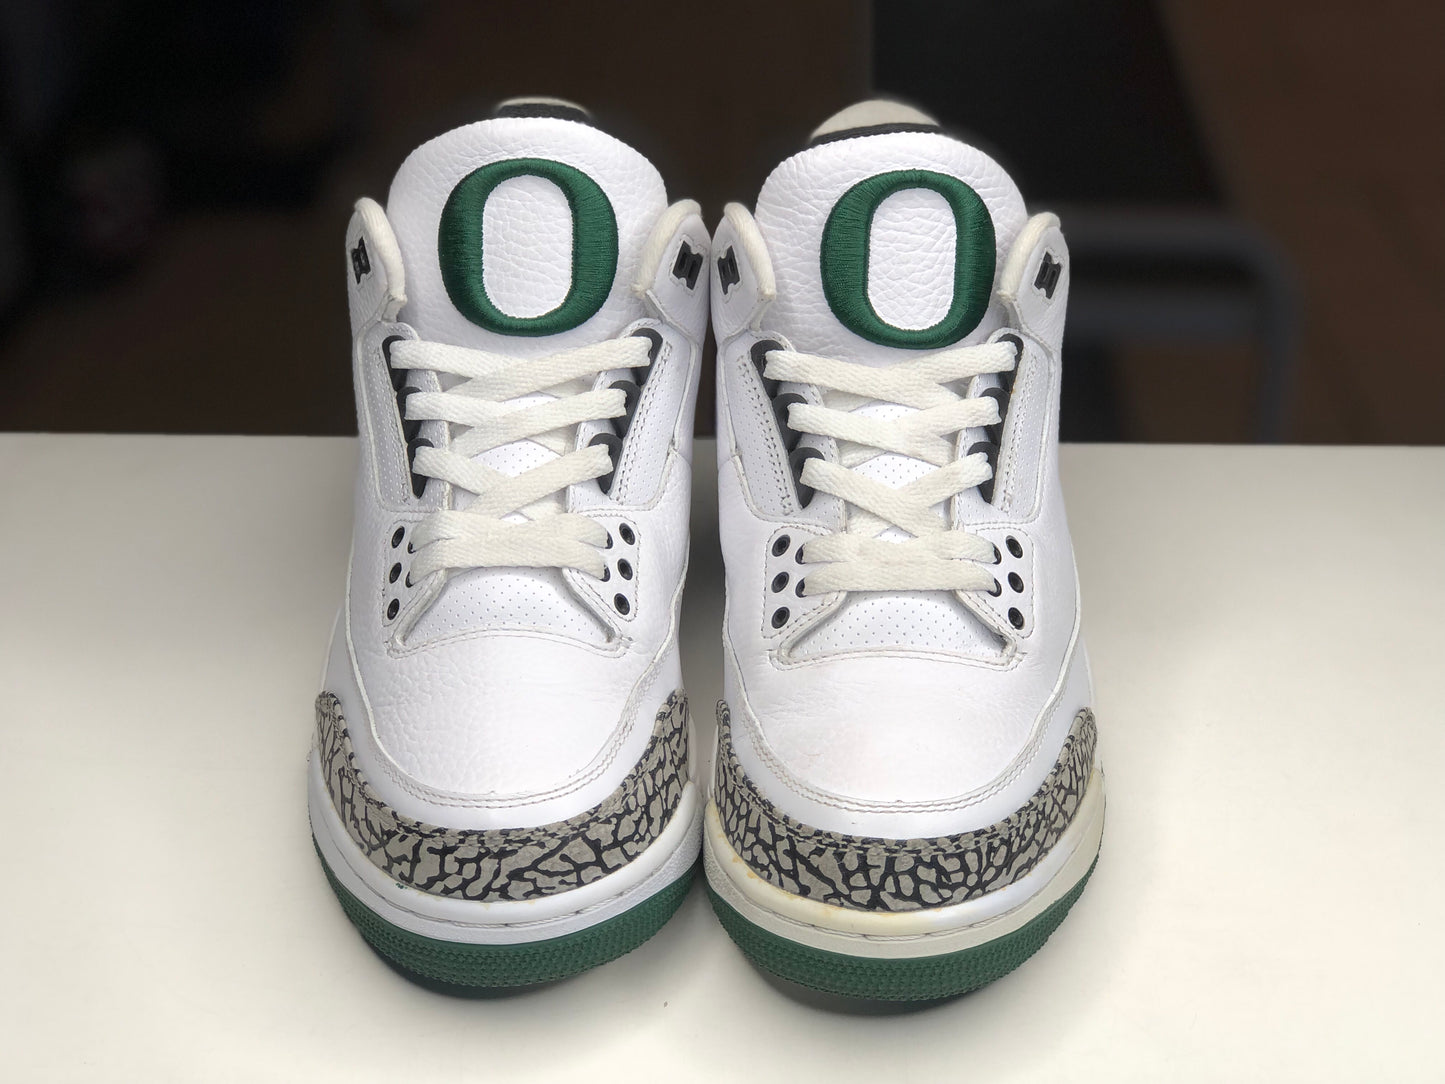 Jordan 3 Oregon Samples size 9.5